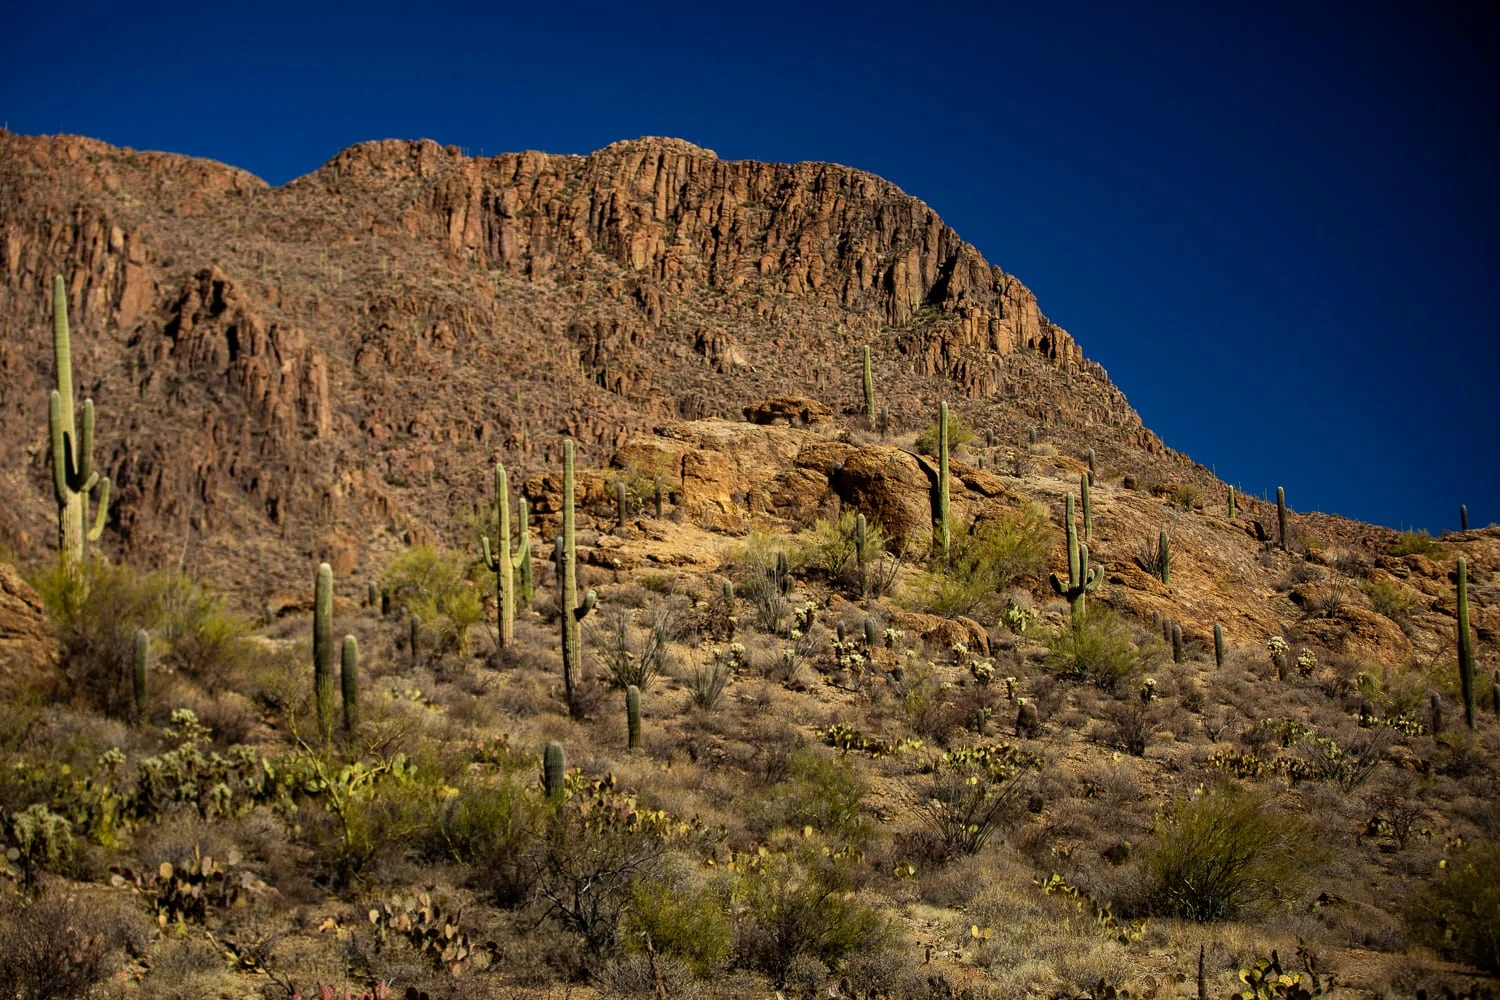 A landscape photo of Saguaro cactuses in Tucson Mountain Park against a blue sky.